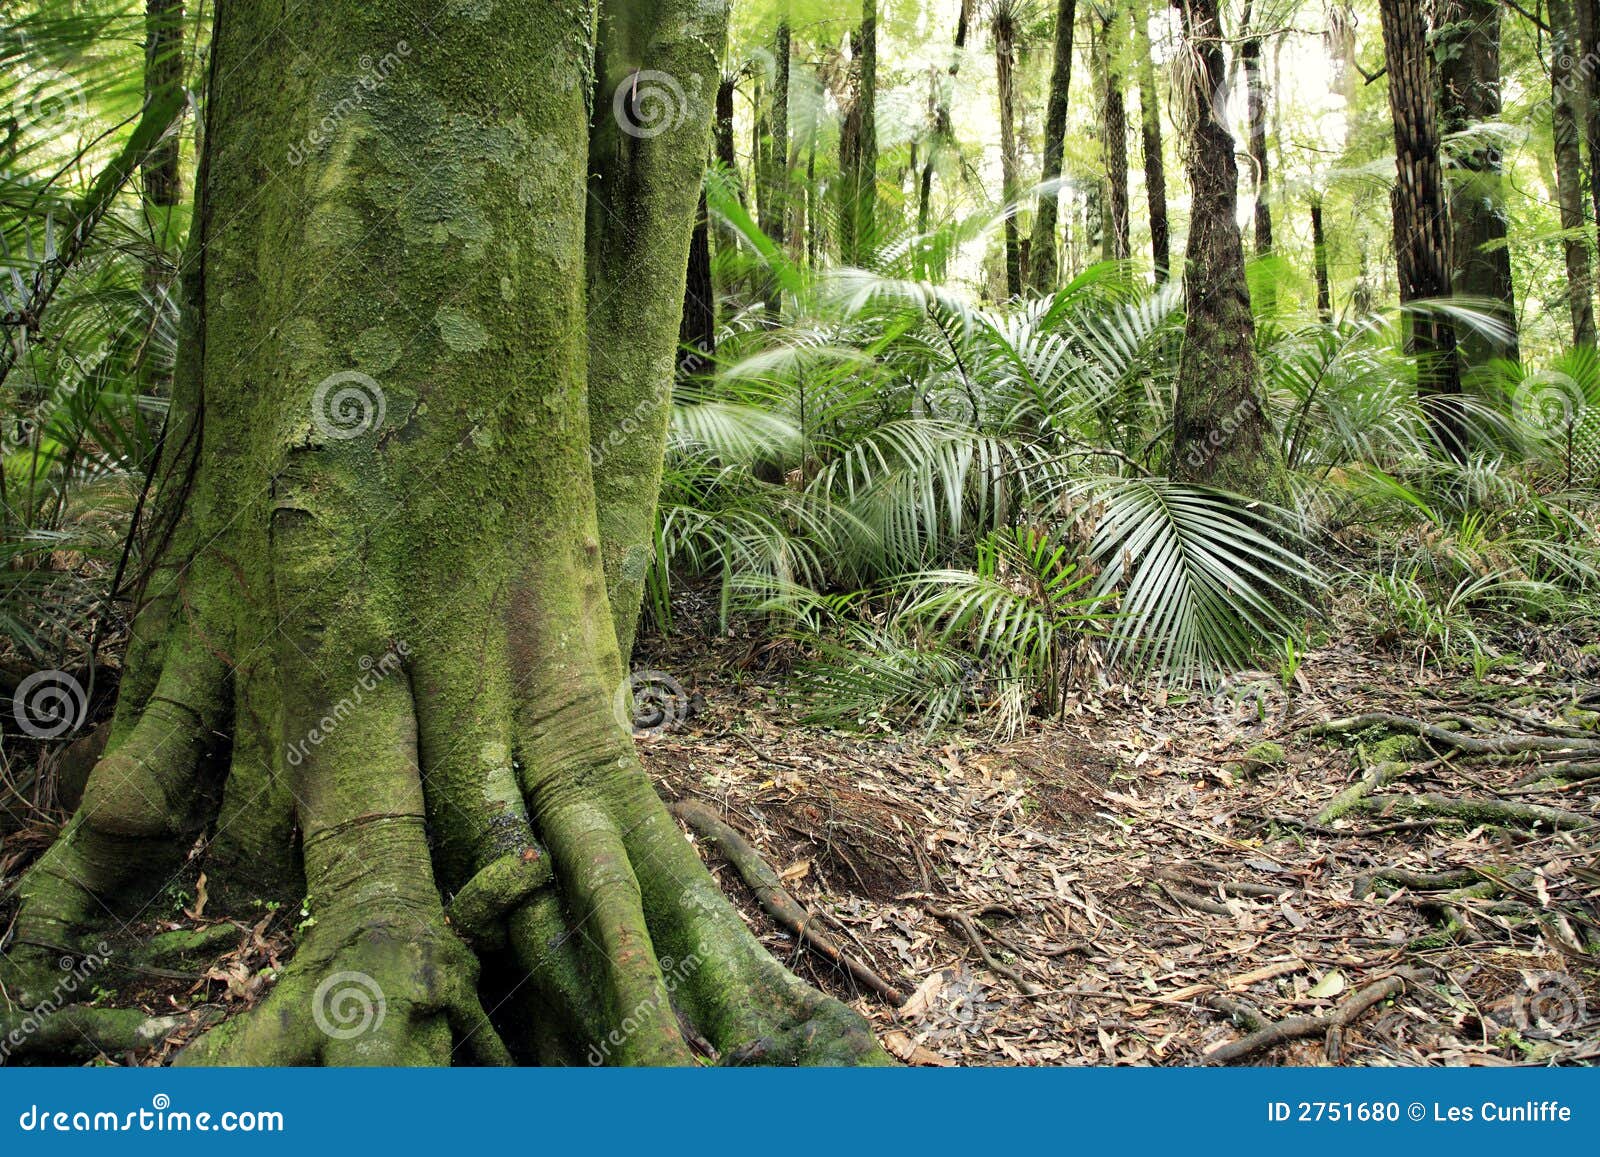 photo stock arbre tropical image